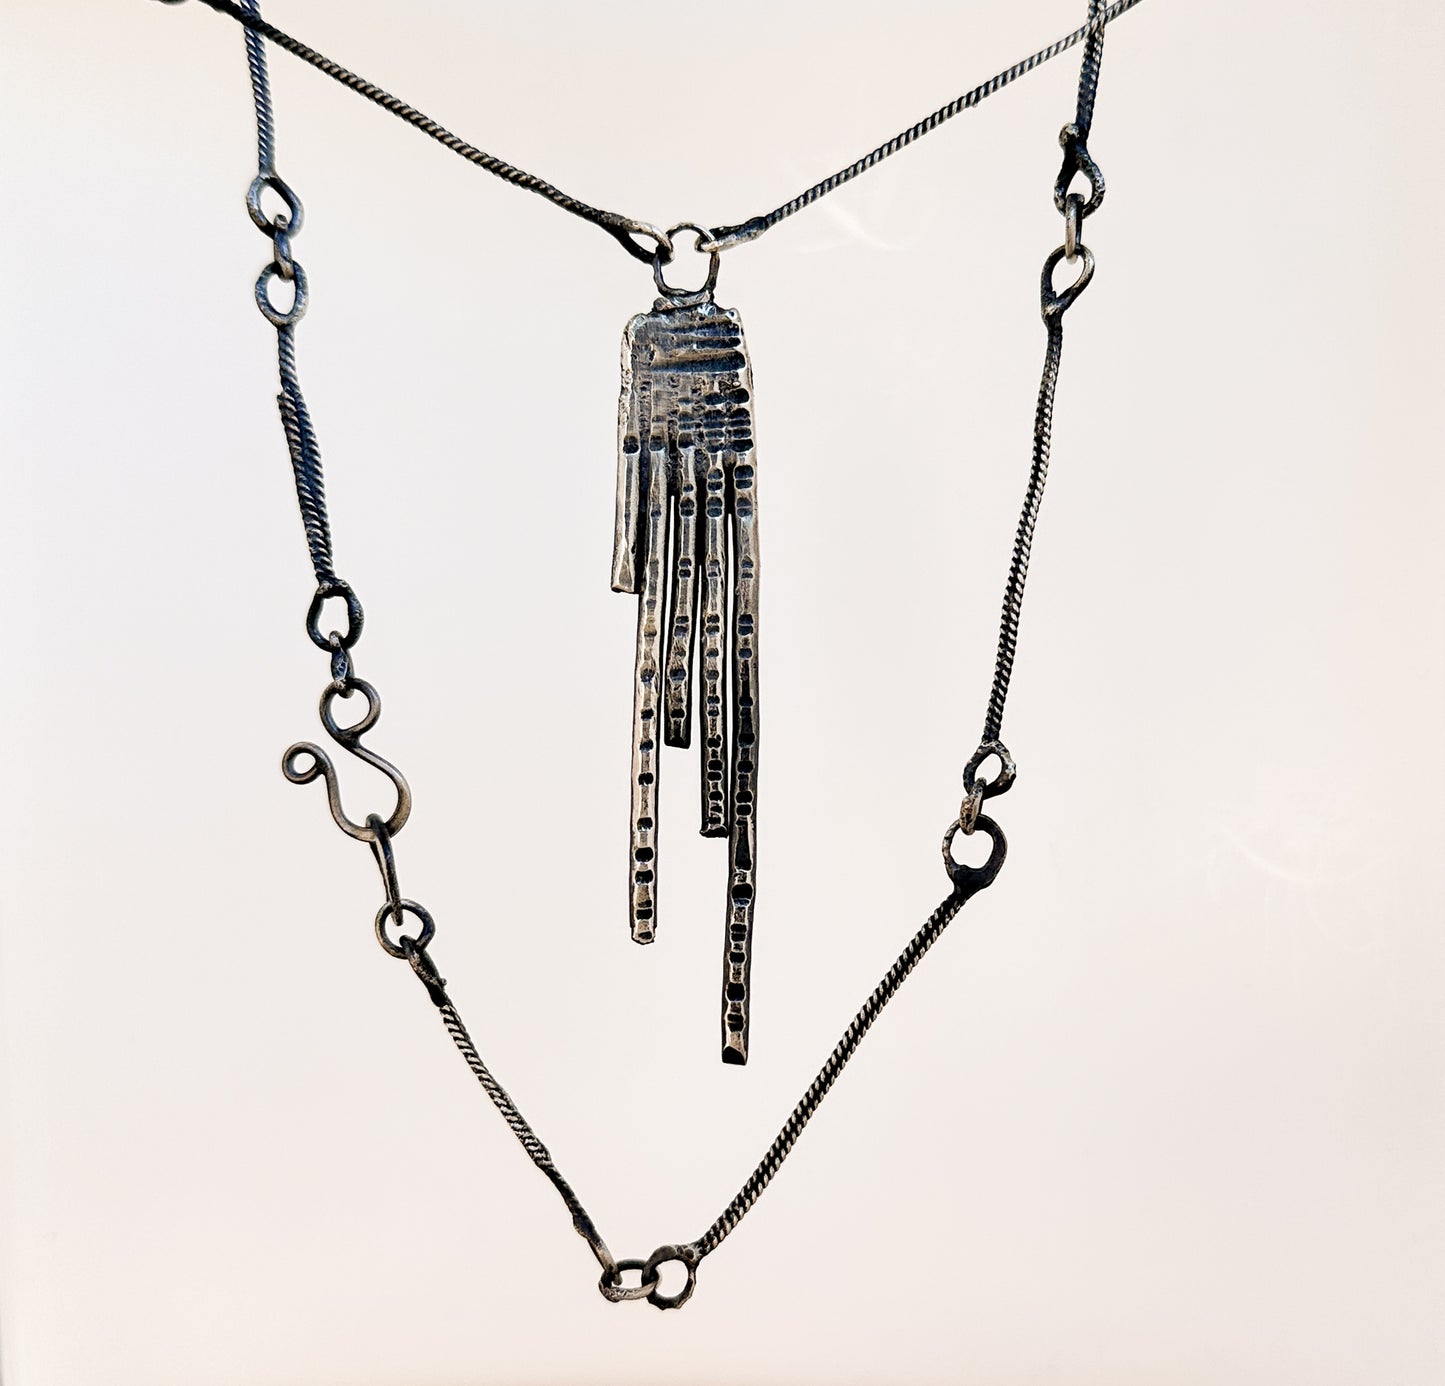 Neckpiece pendant + chain